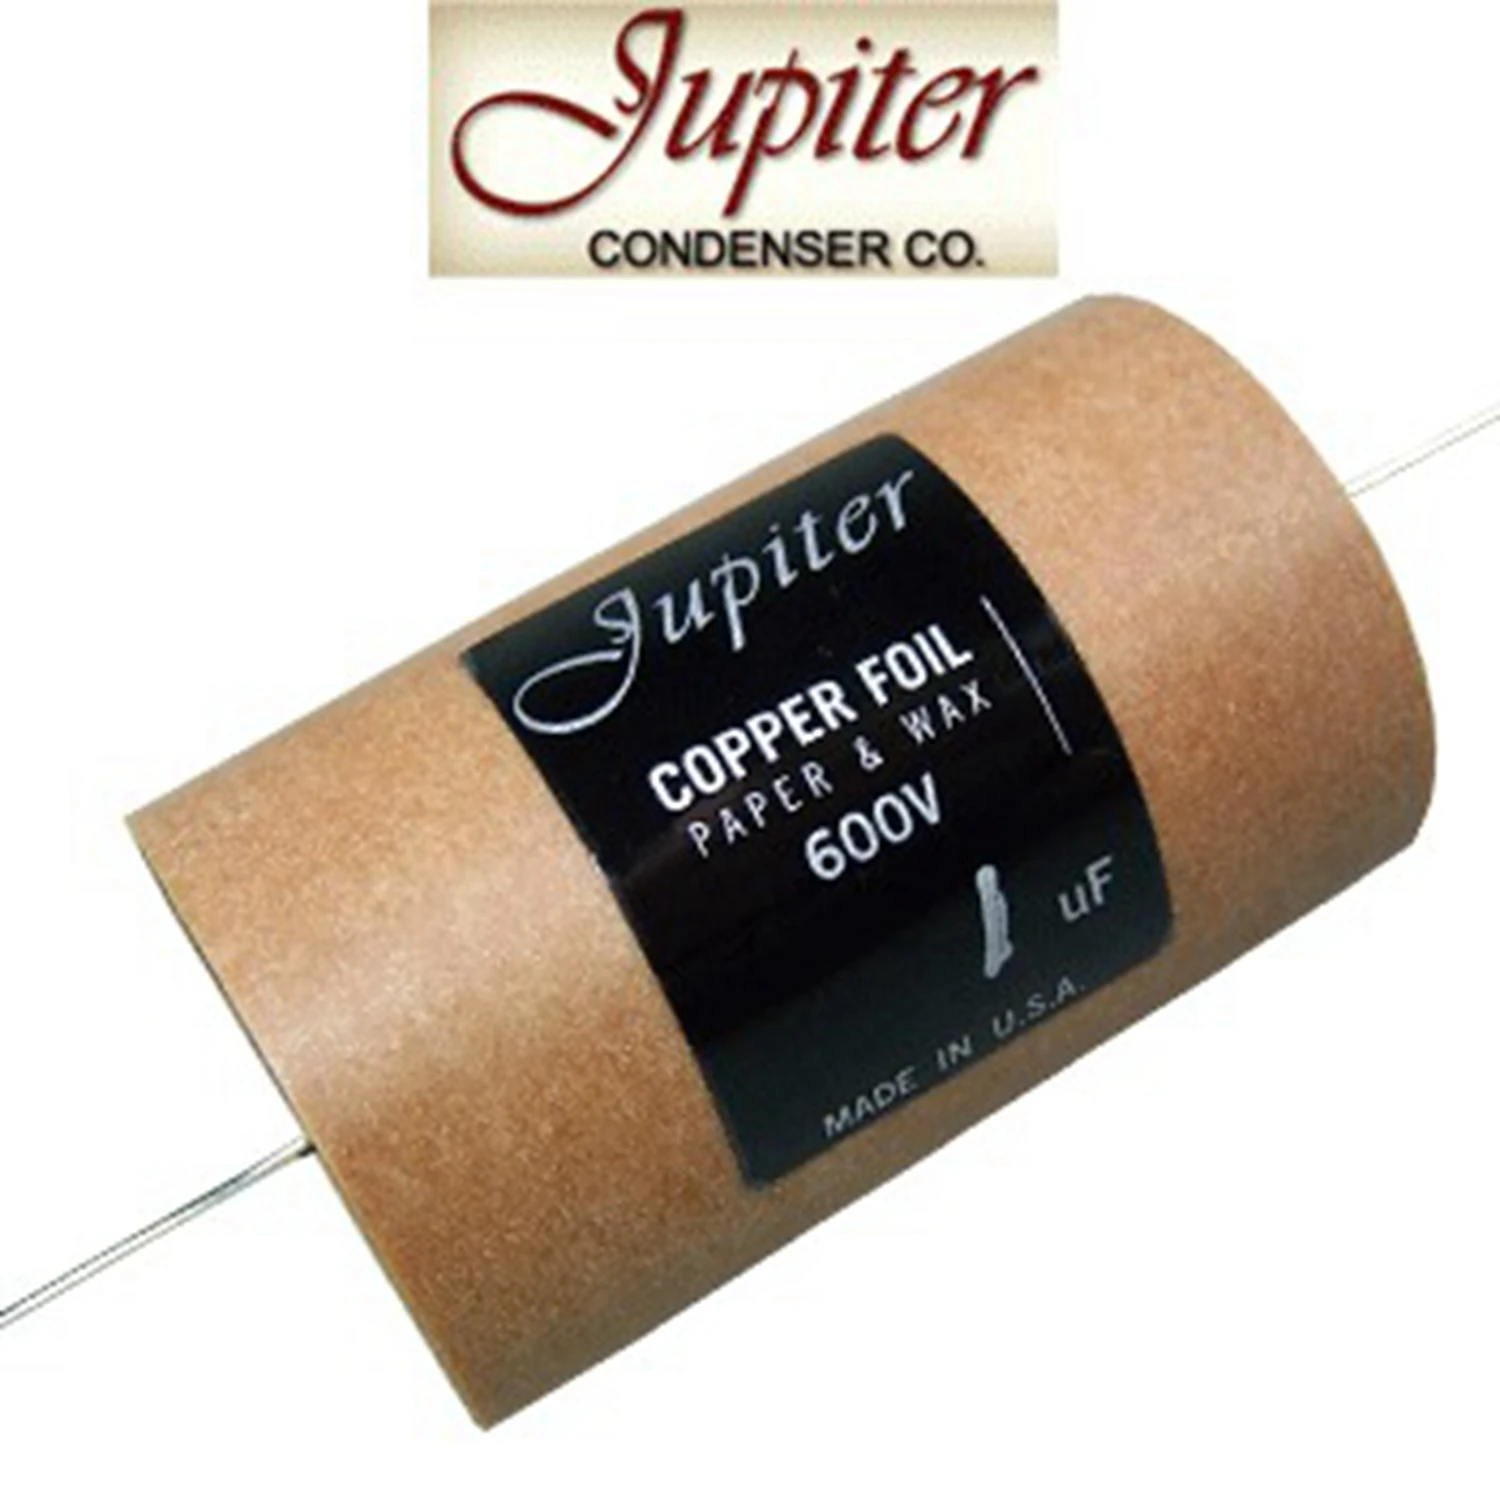 1pcs Original American jupiter Copper Foil Paper & Wax Capacitors series 5% 80C 100V/400V/600V Audio capacitor free shipping 1pcs new original nce01p13k fet mosfet p 100v 13a patch to 252